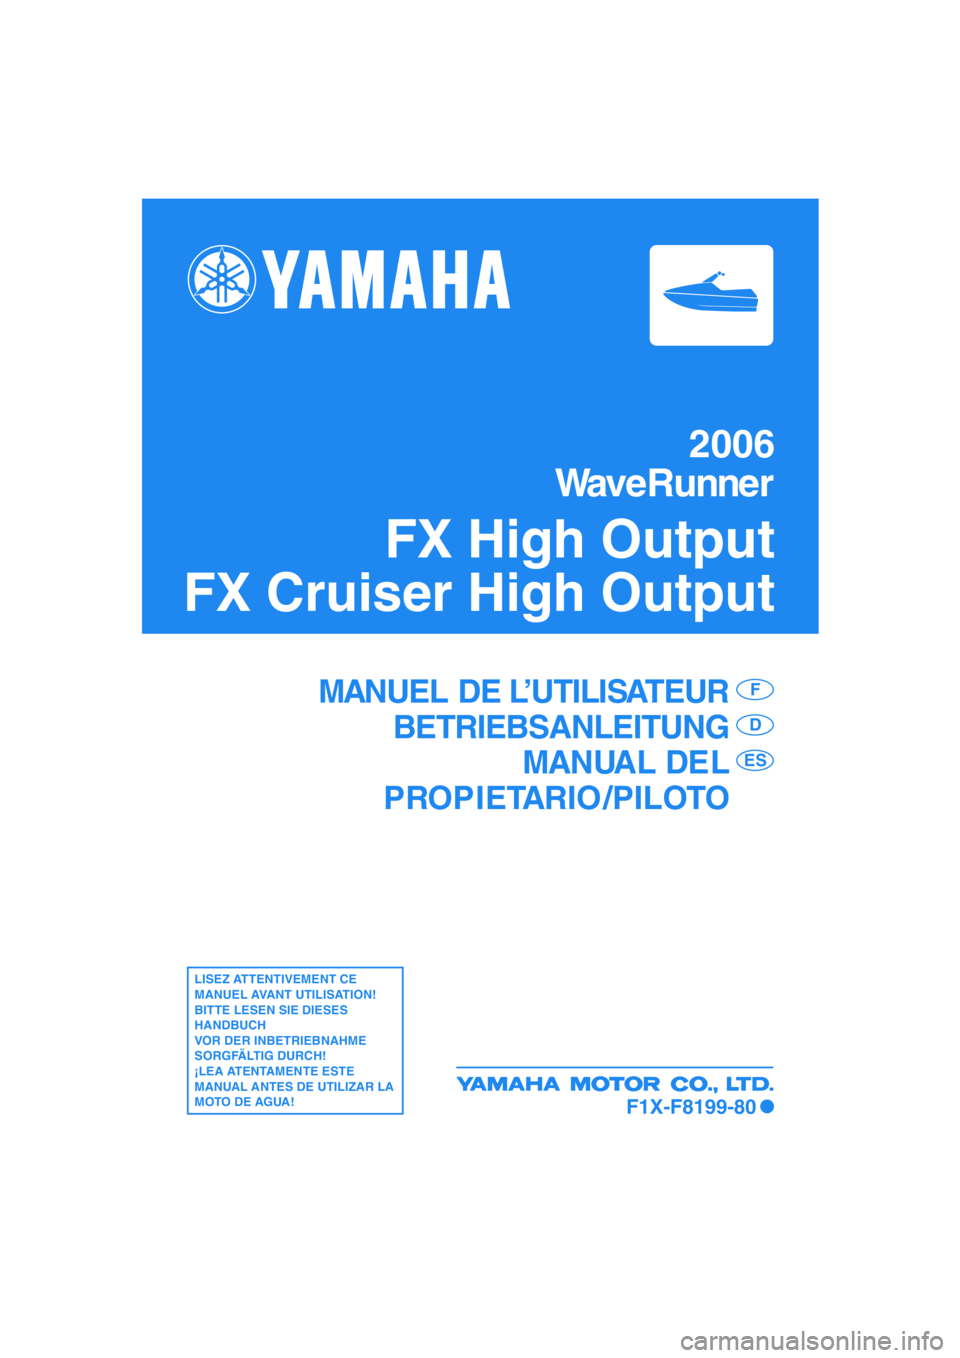 YAMAHA FX HO 2006  Manuale de Empleo (in Spanish) 